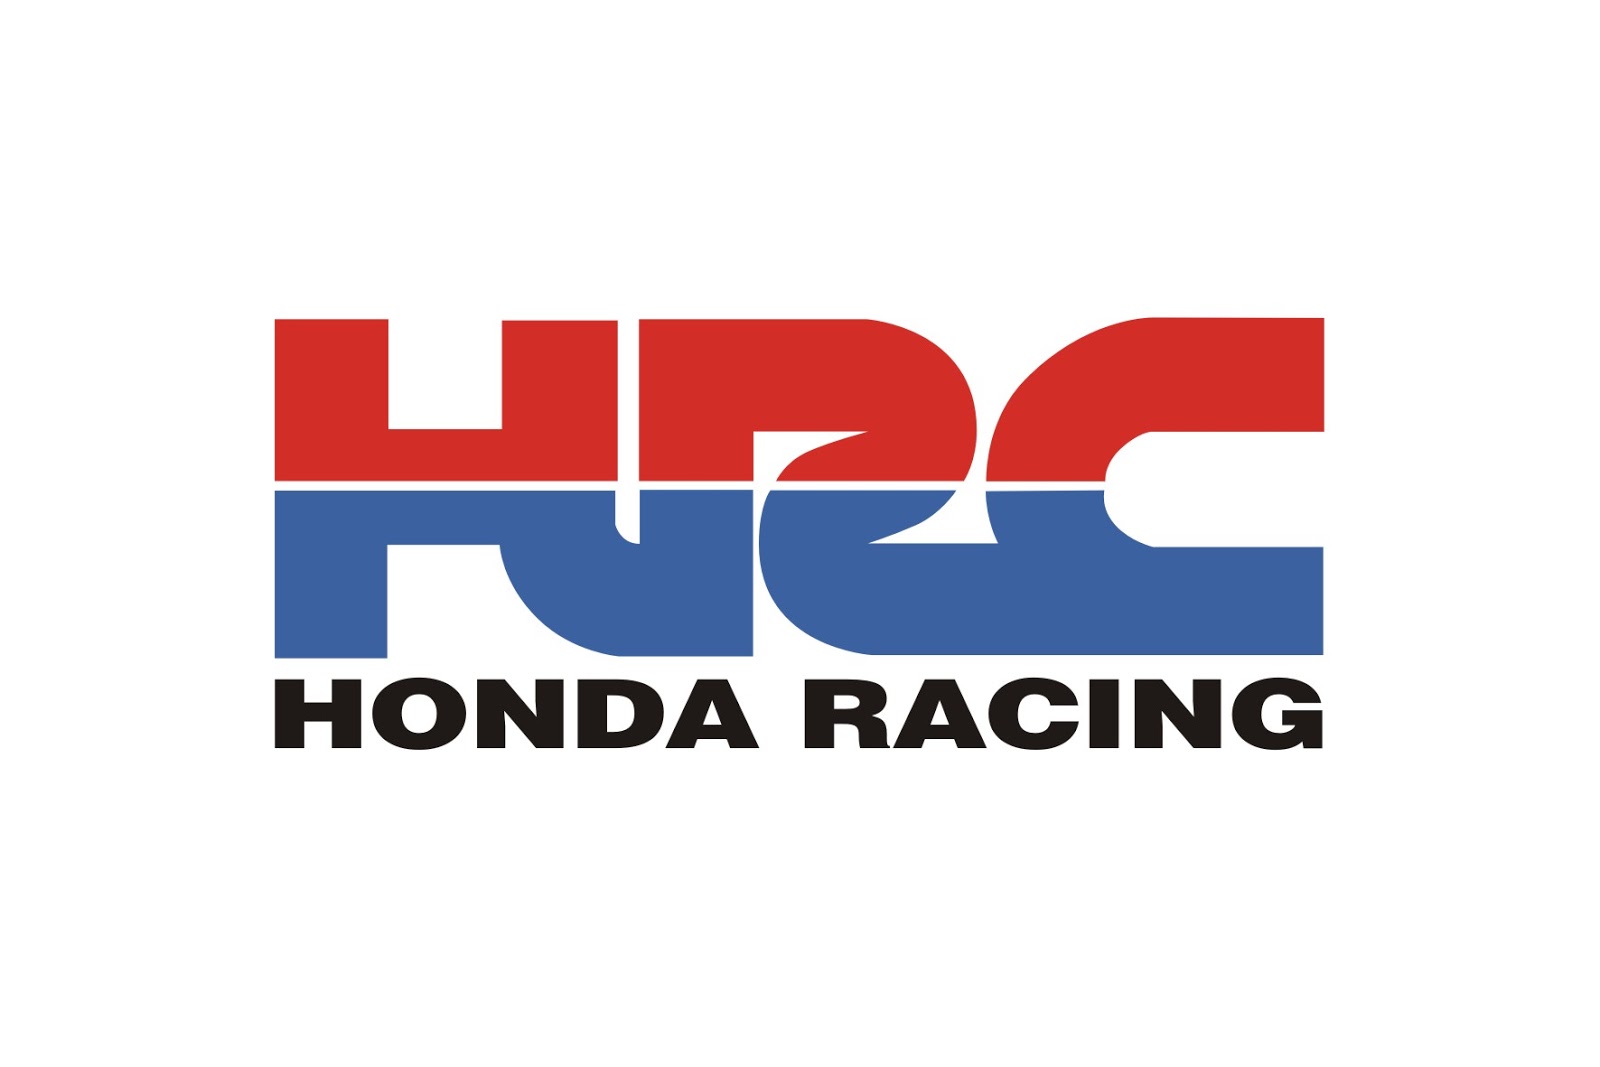 Honda racing logo vector